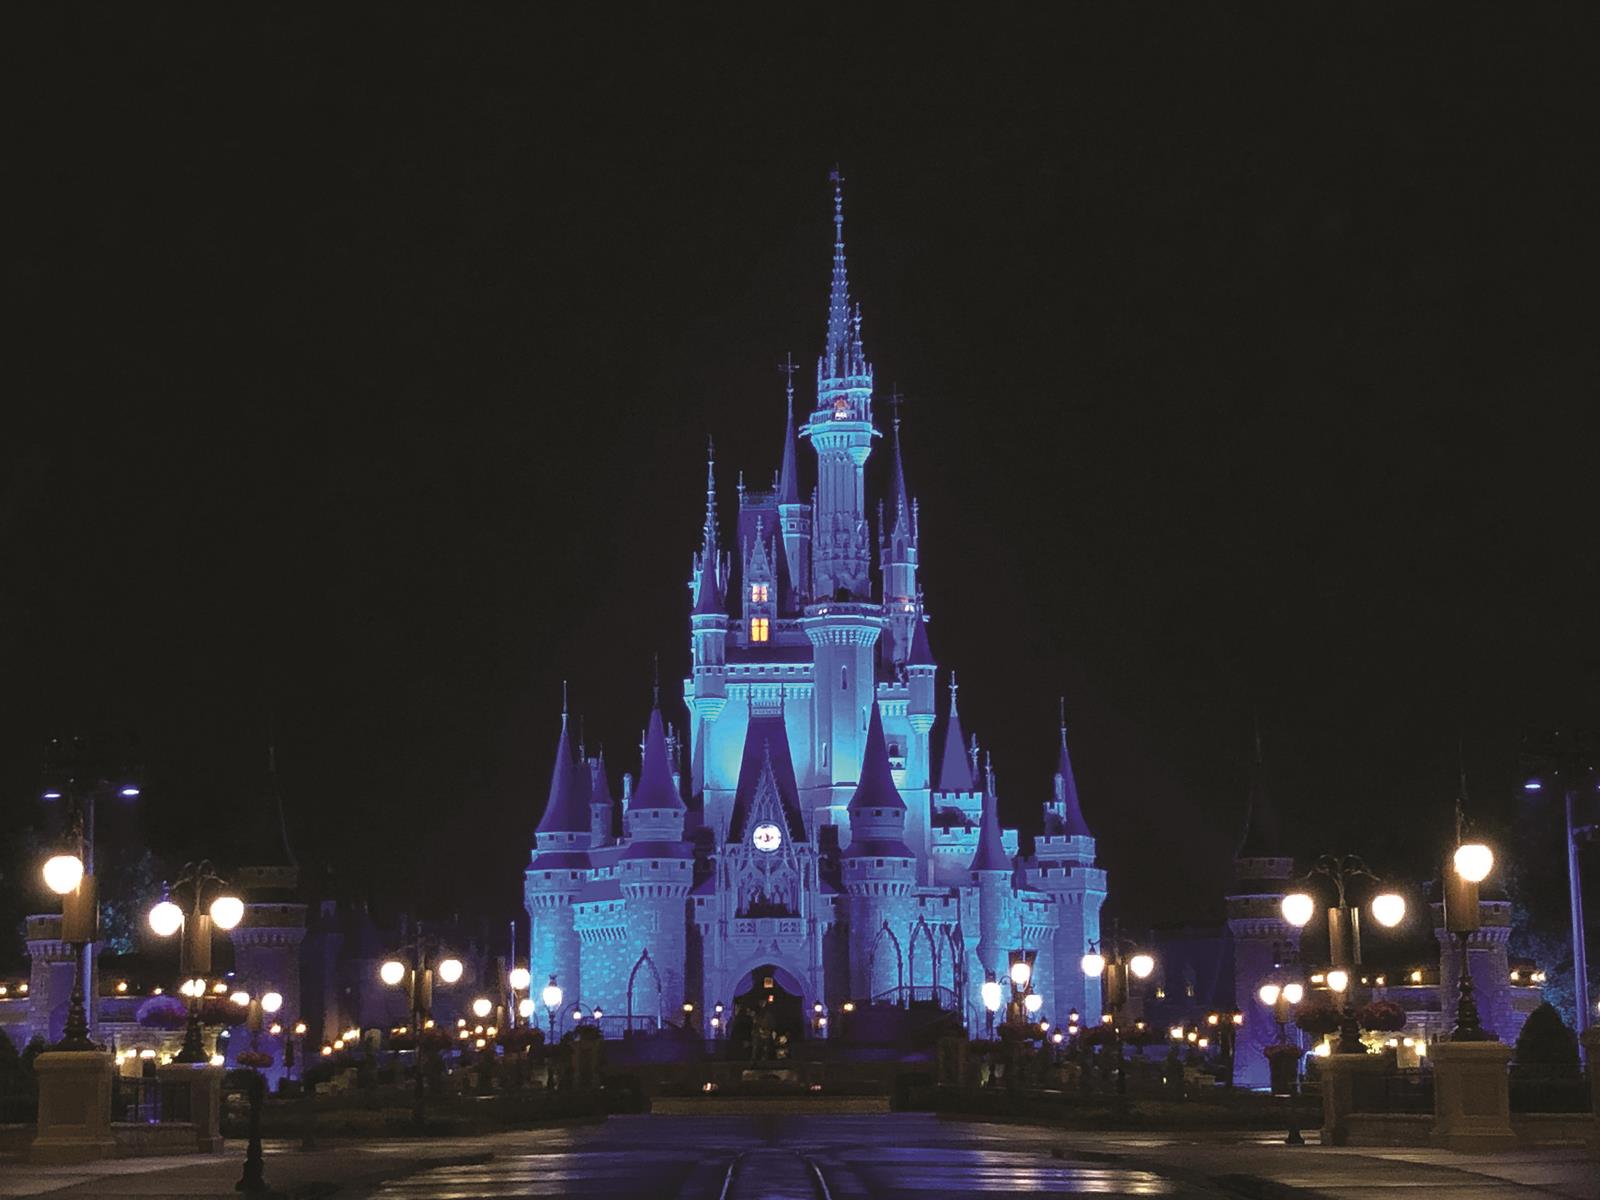 Cinderella Castle in Magic Kingdom Park at Walt Disney World Resort in Lake Buena Vista, Florida